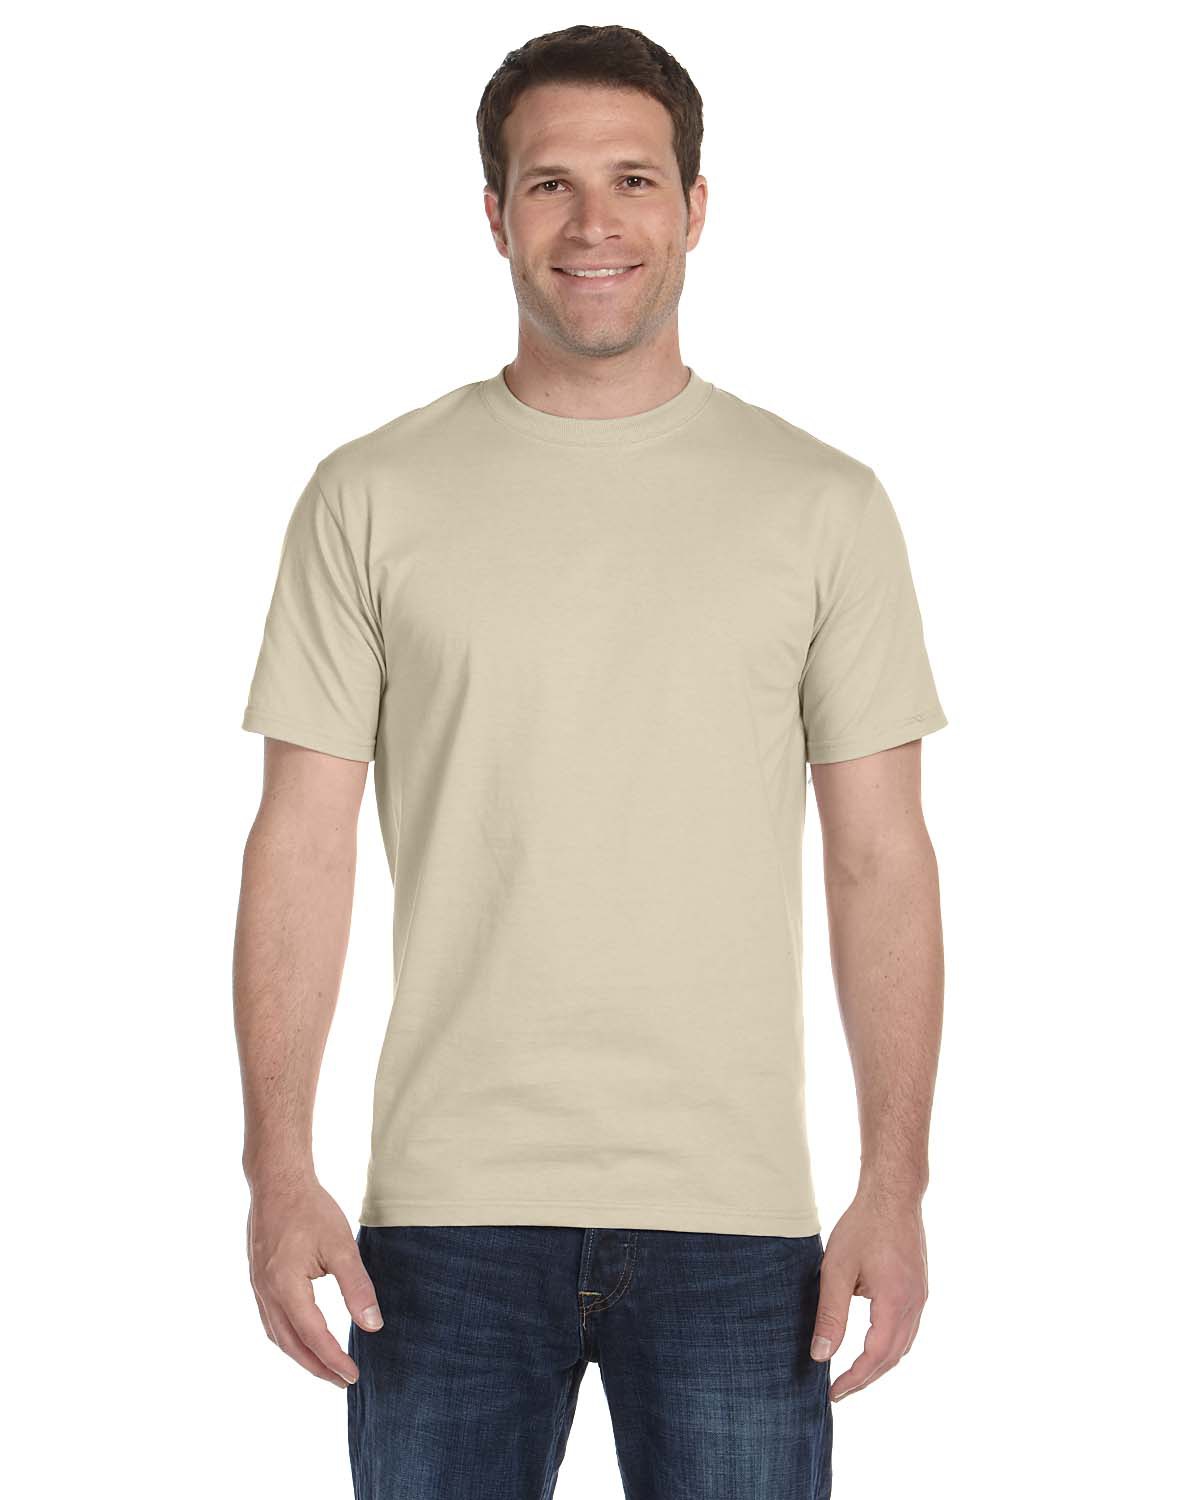 5280 Hanes 5.2 oz. ComfortSoft® Cotton T-Shirt